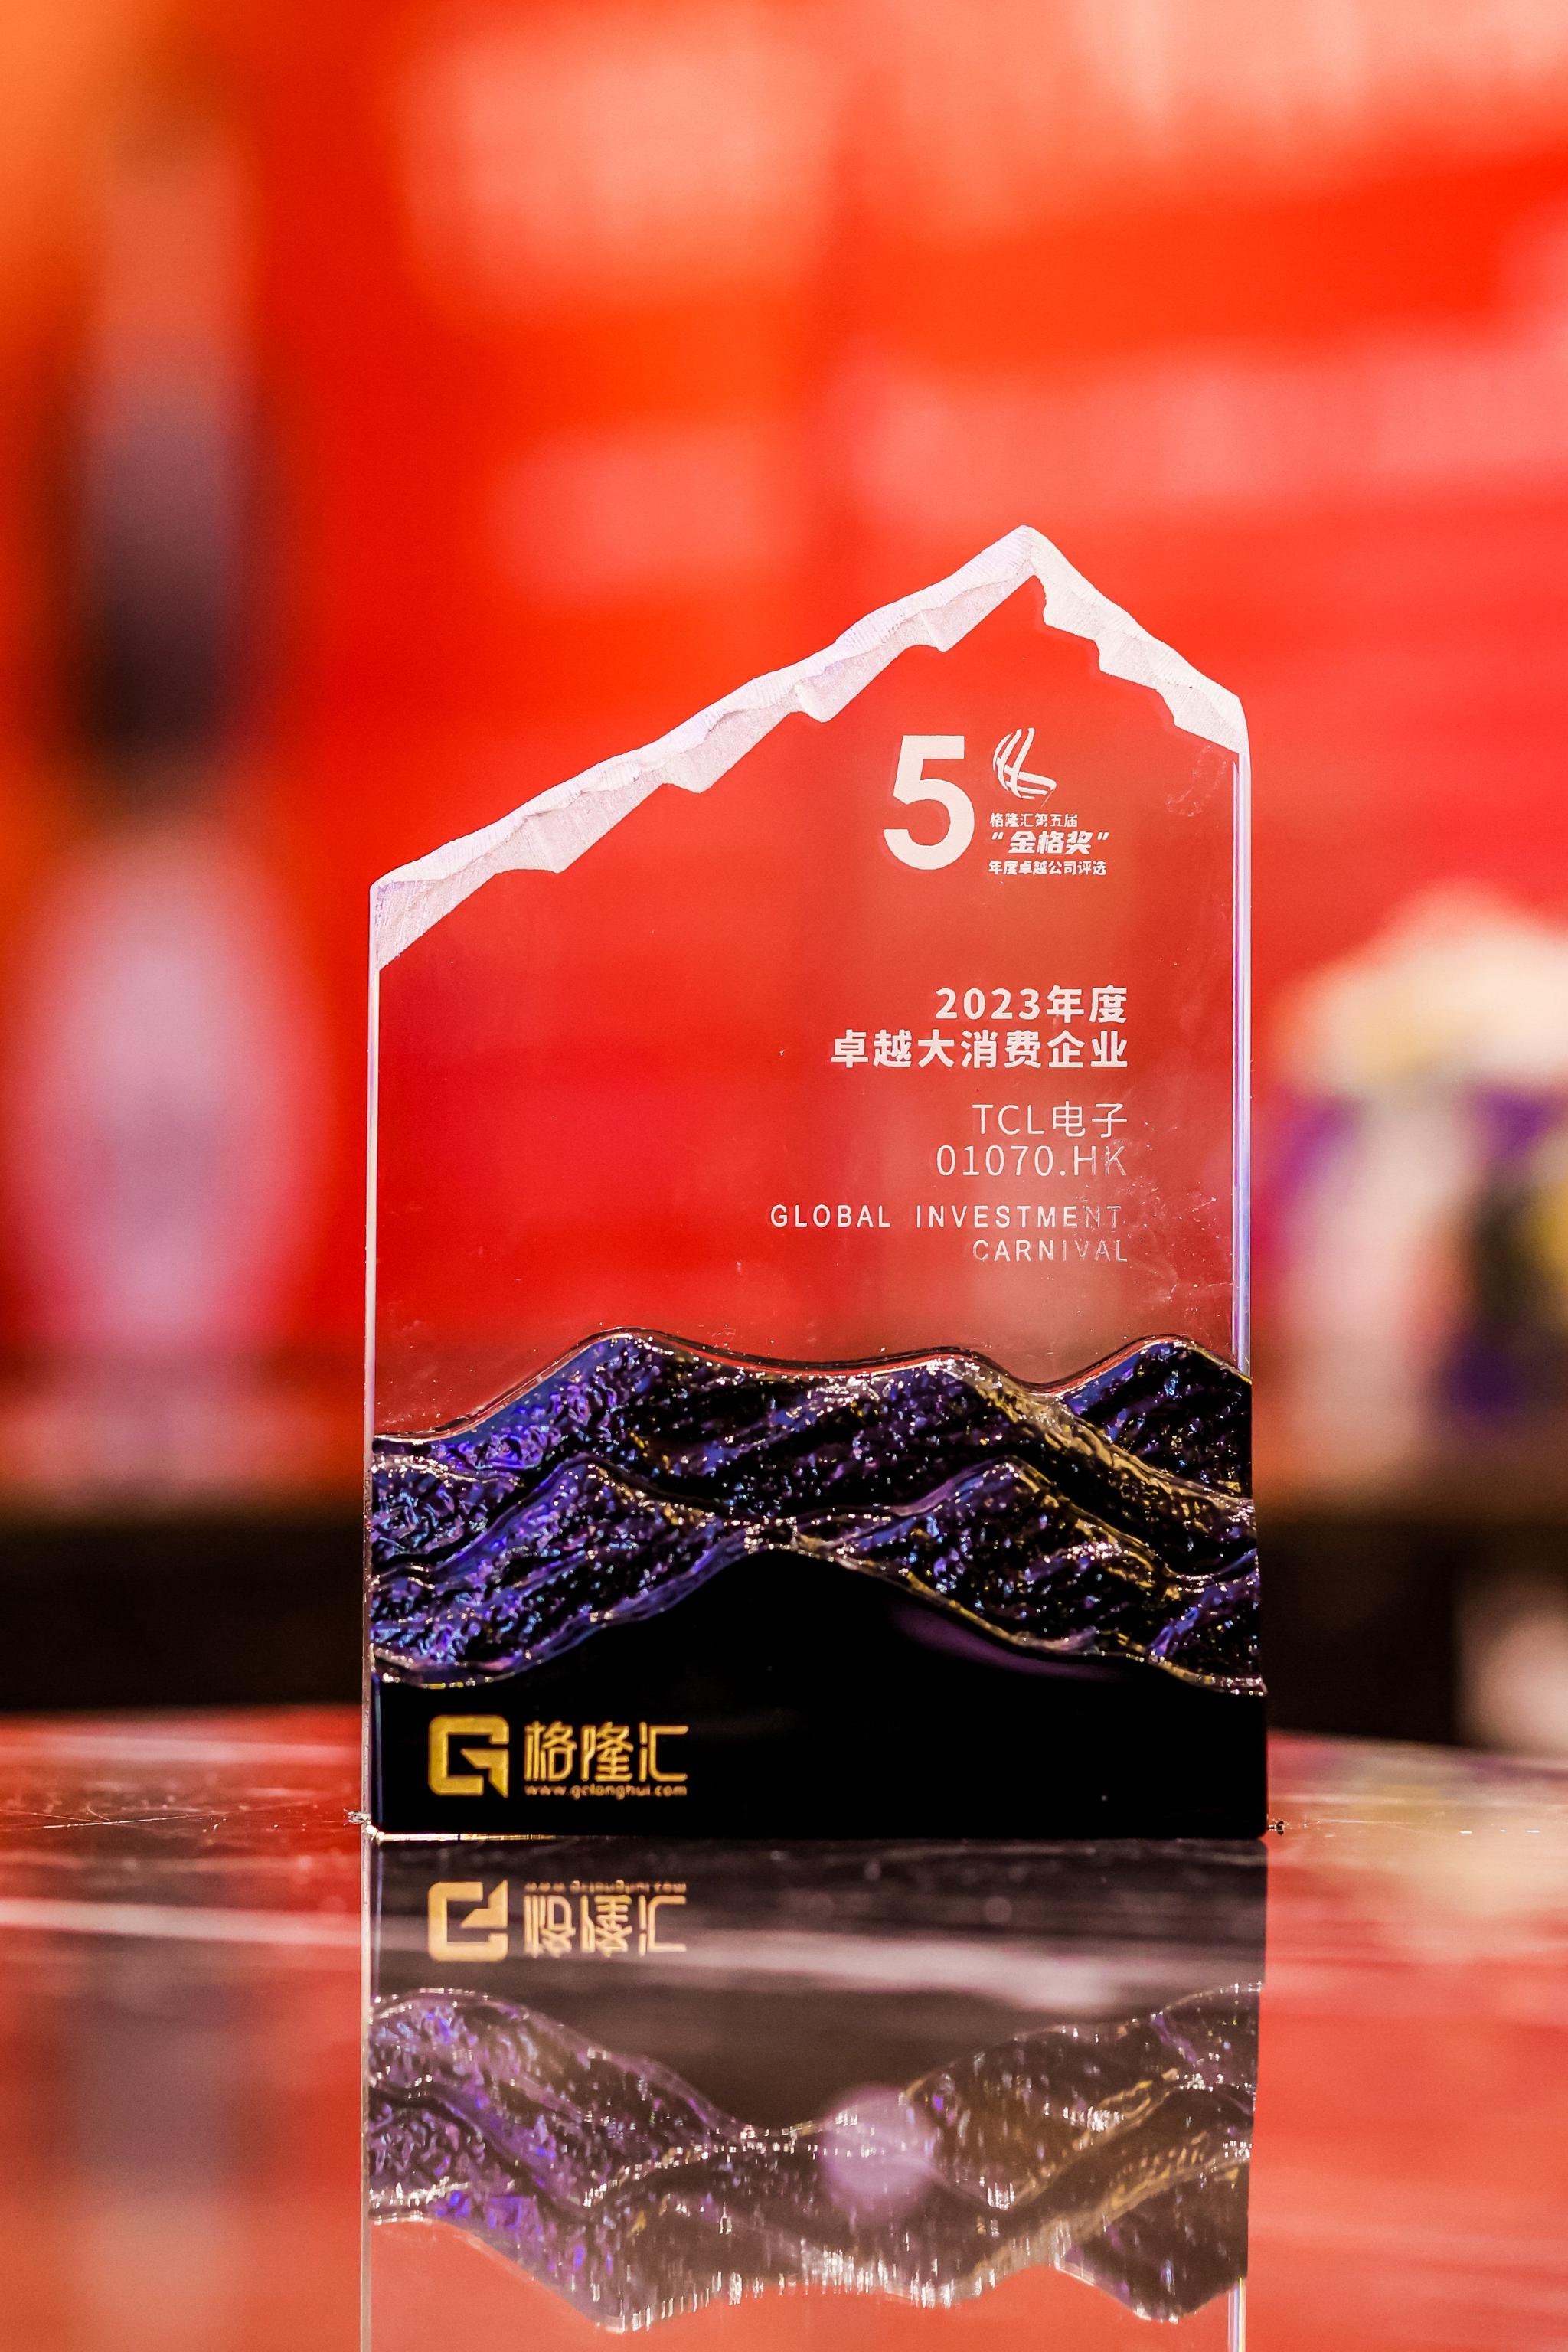 TCL电子(1070.HK)荣获“金格奖——年度卓越大消费企业奖”